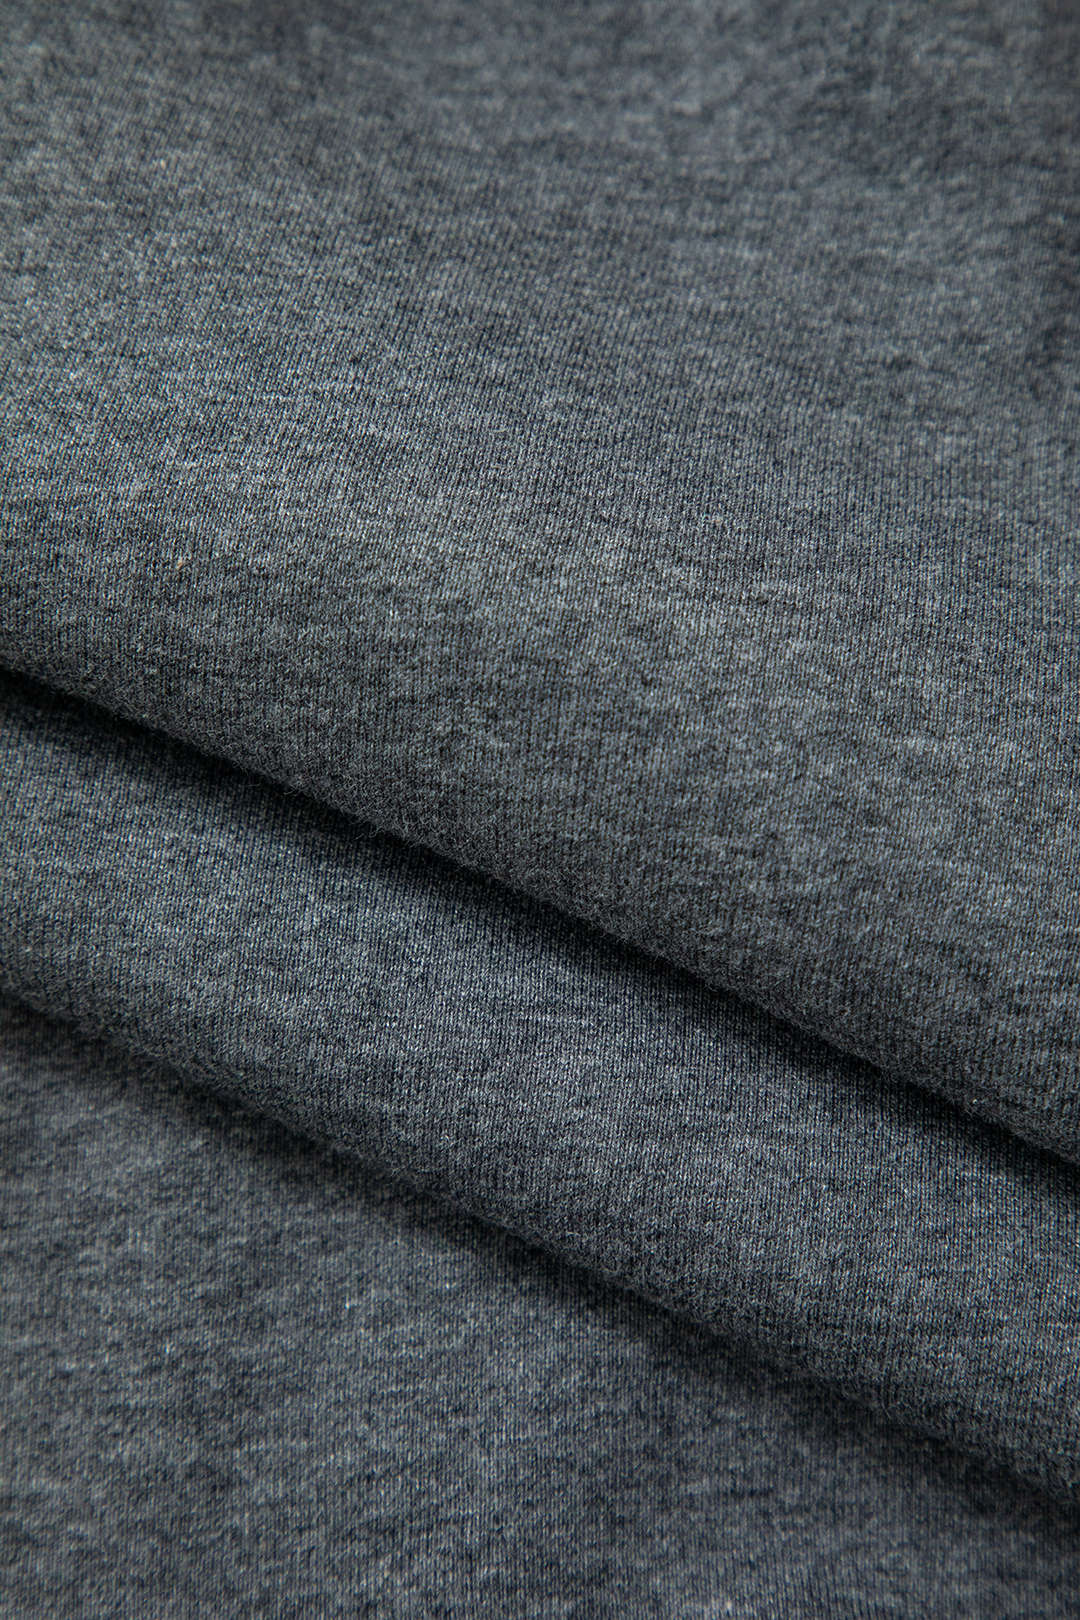 Renaissance Print Round Neck Long Sleeve Sweatshirt